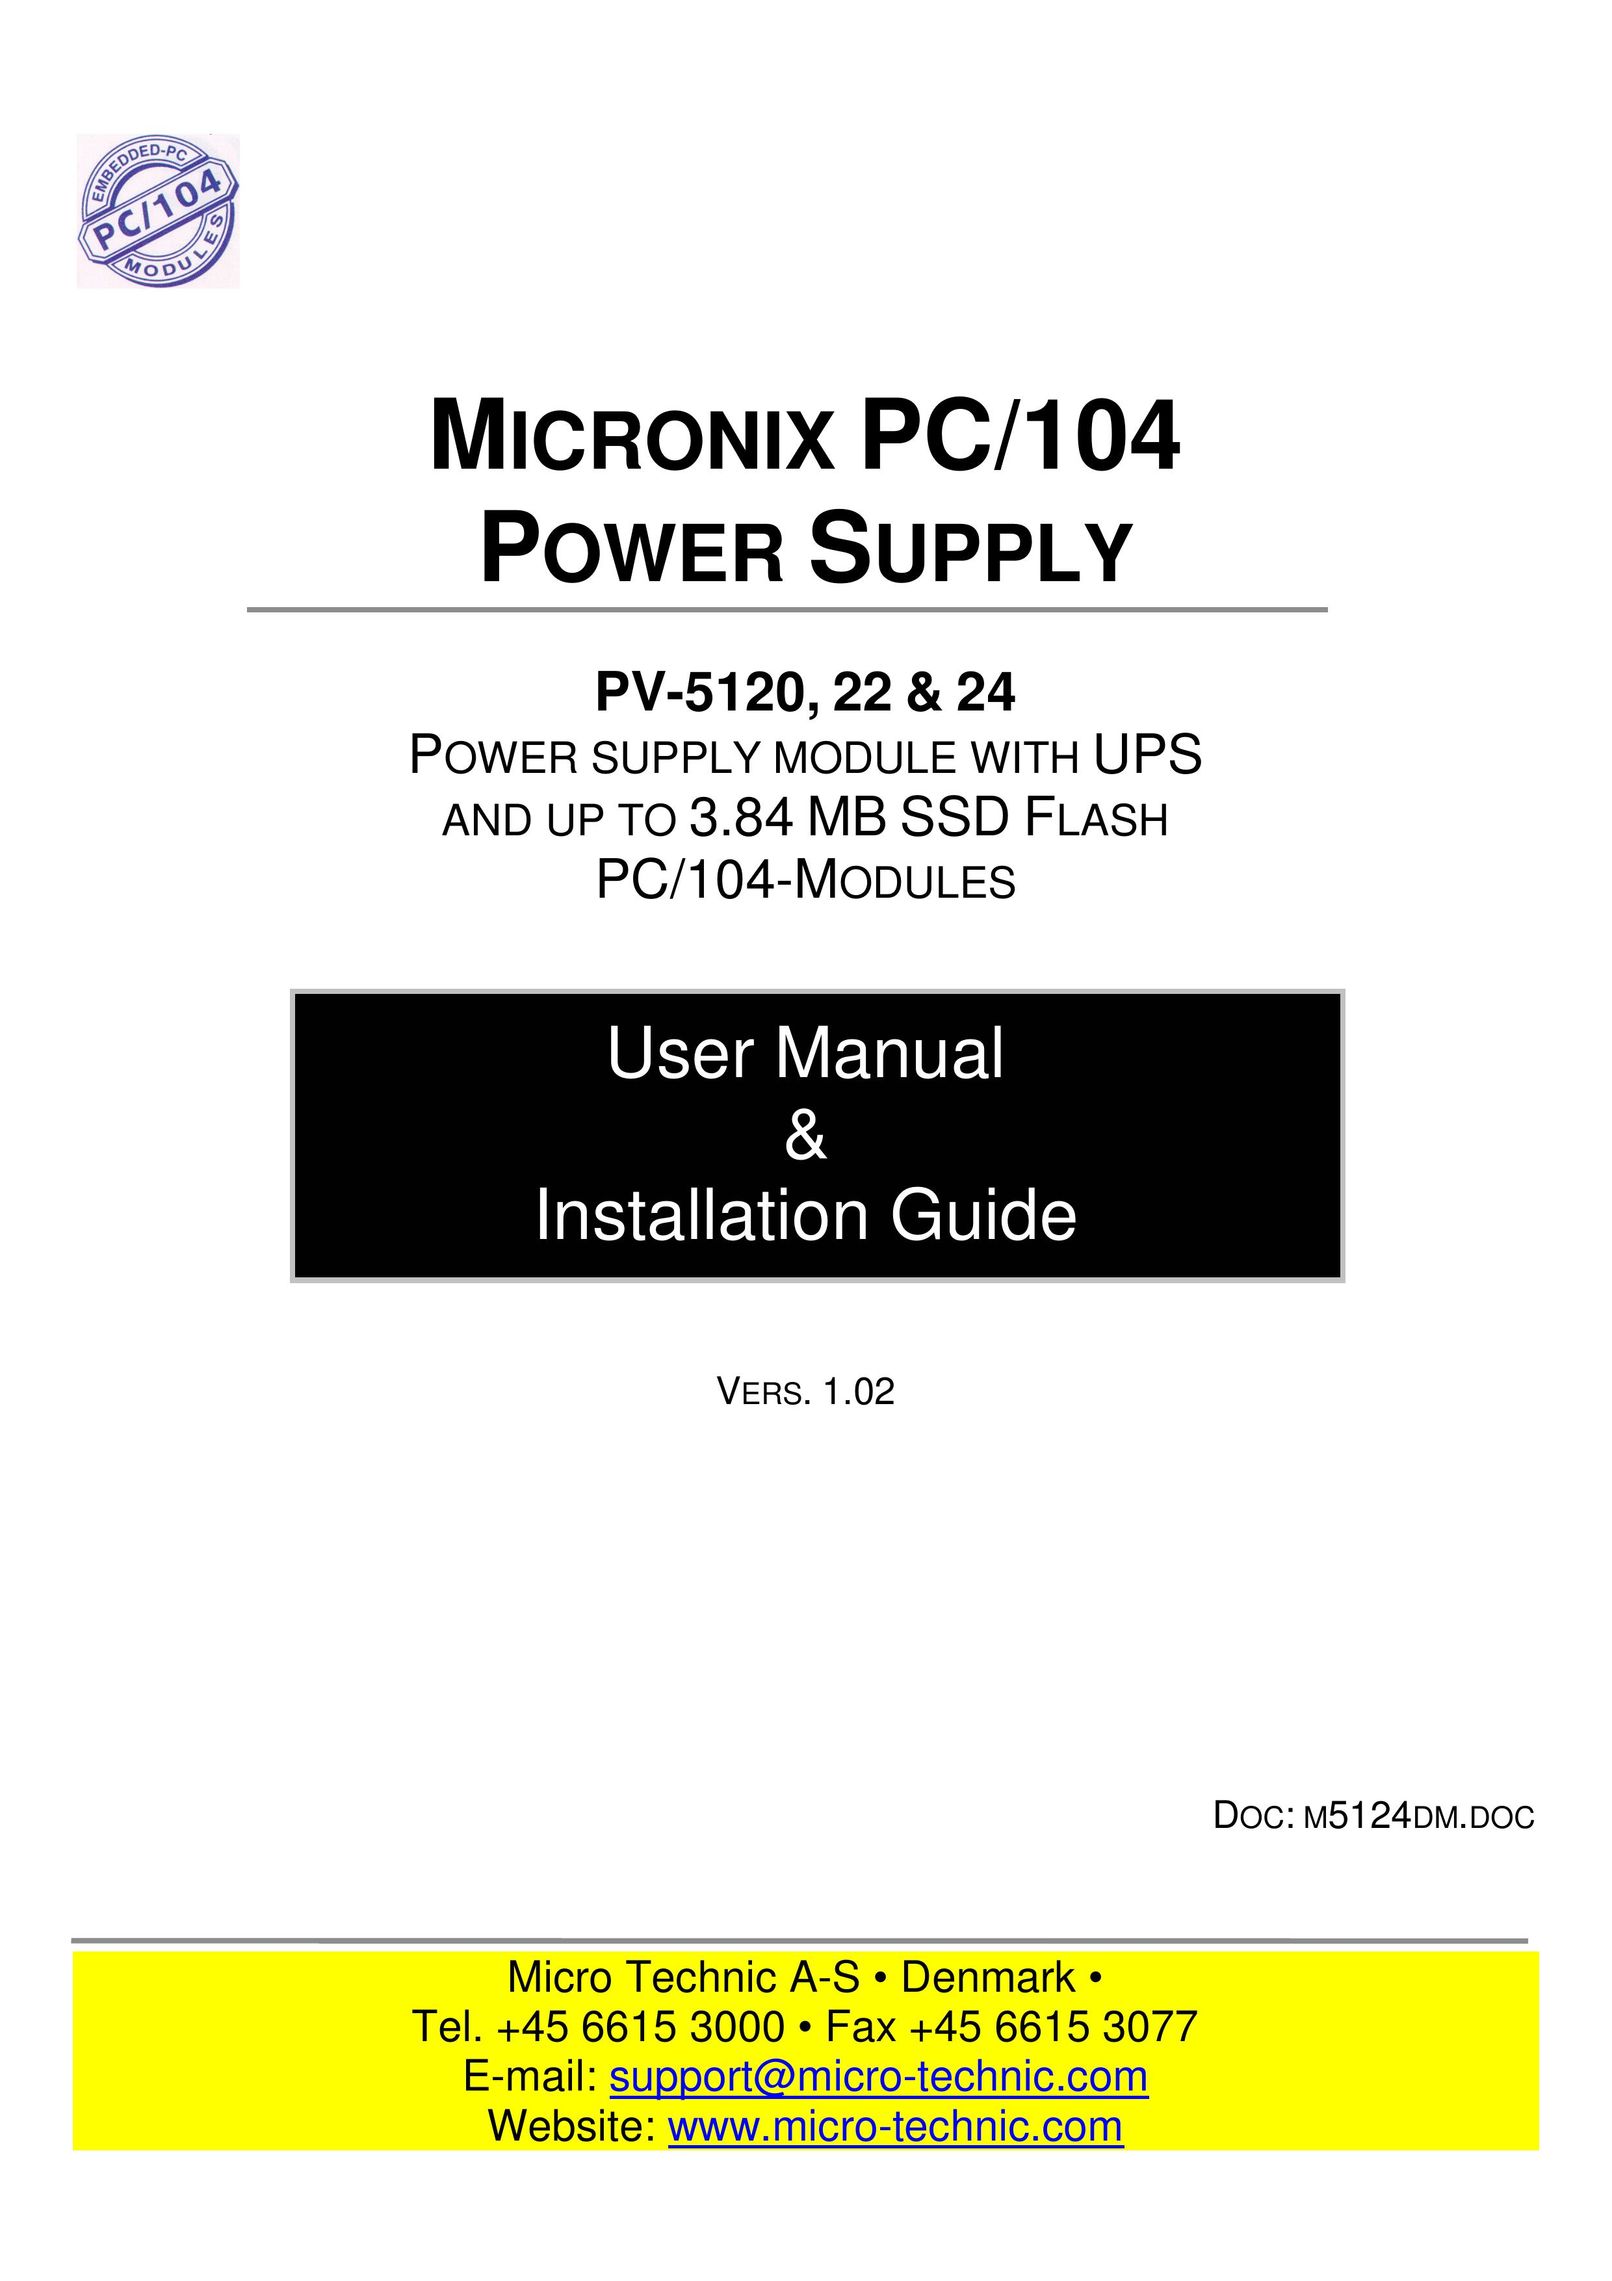 Micro Technic PV-5122 Power Supply User Manual